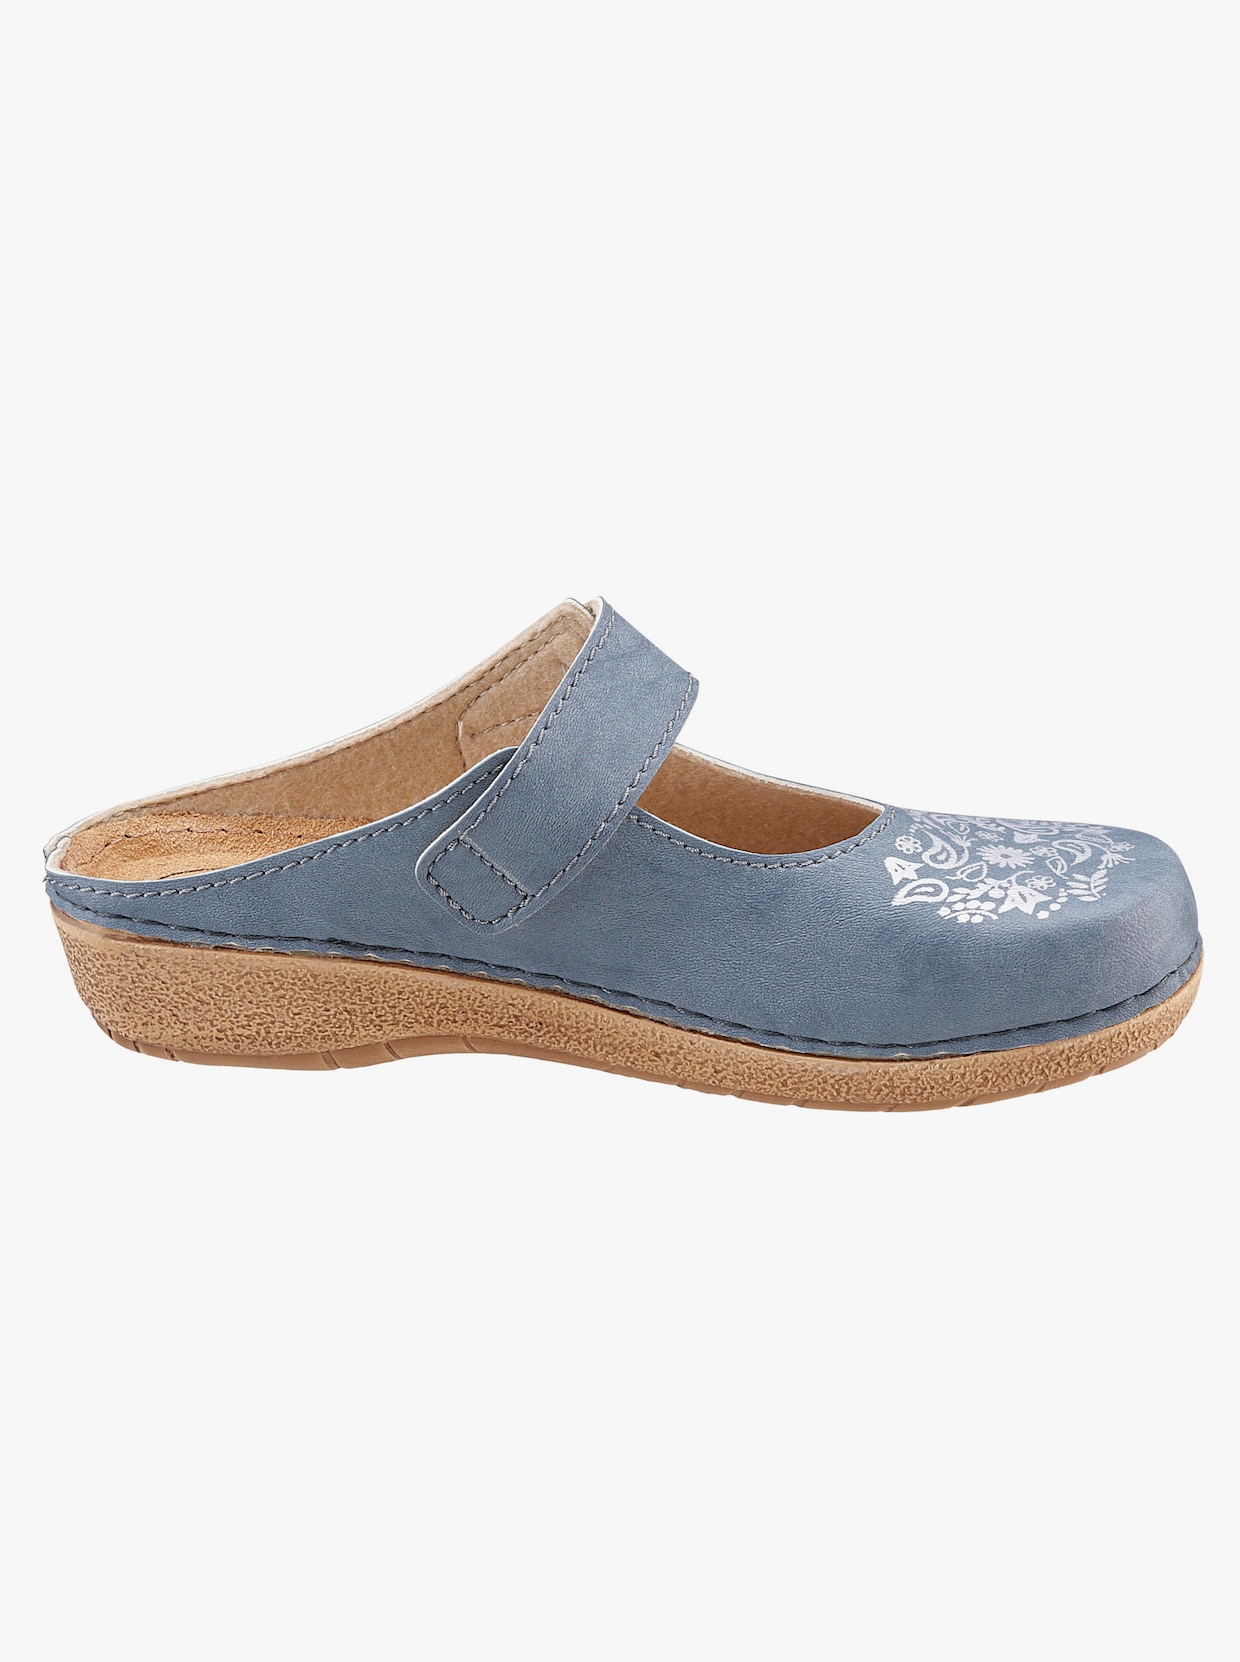 Franken Schuhe Slippers - jeansblauw